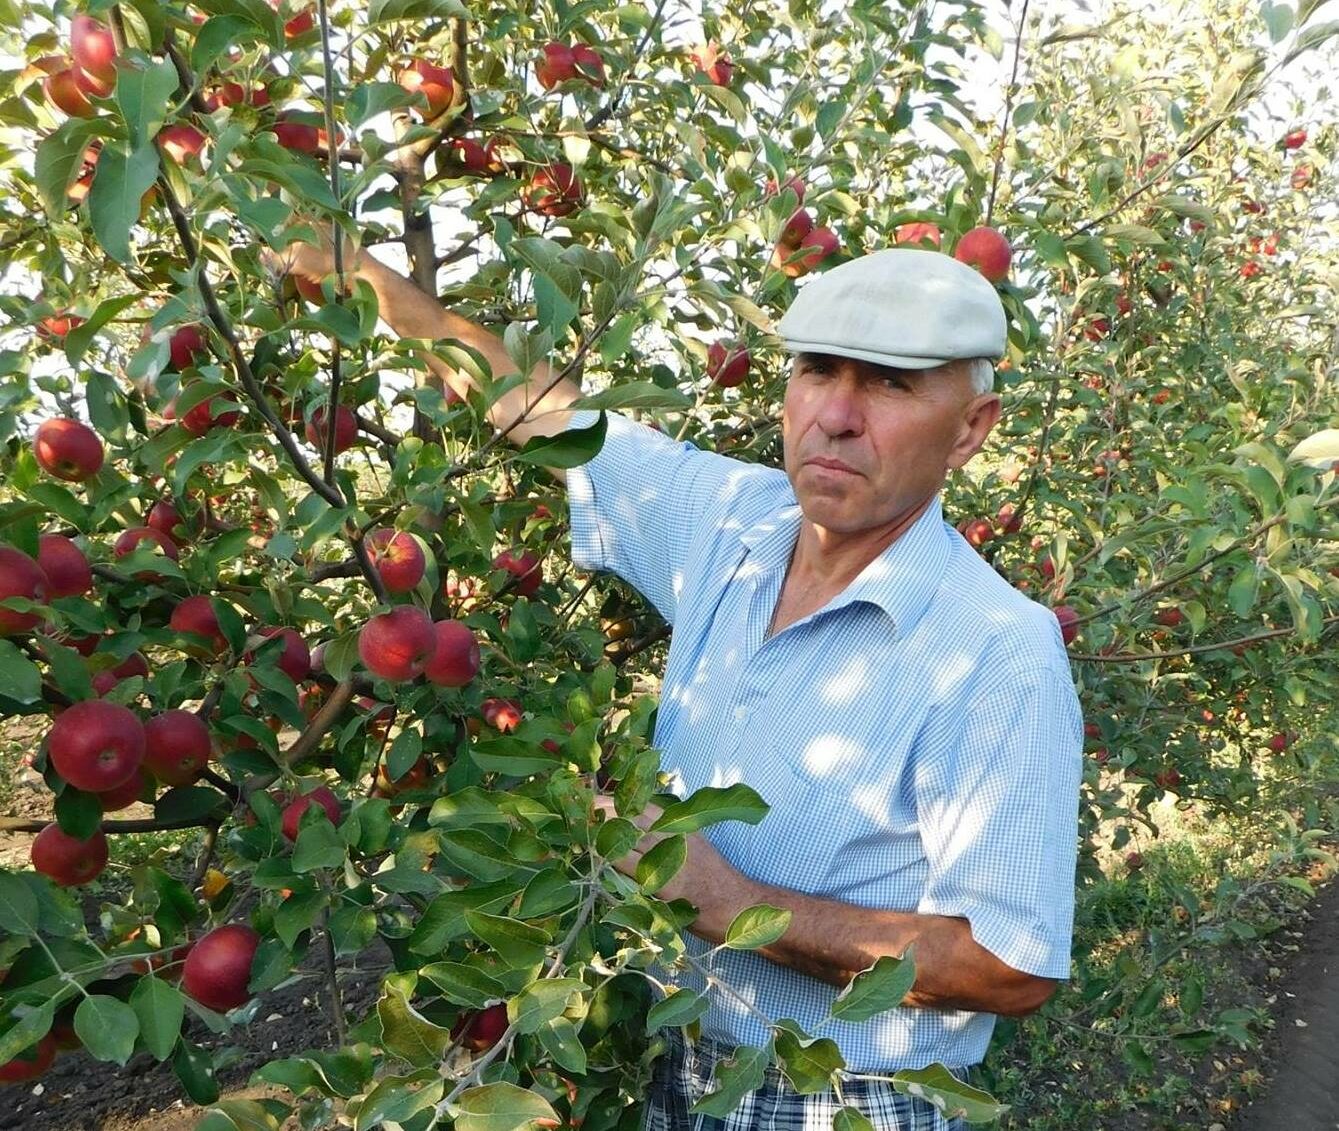 Petro Lyakhovych, Head of the Association of Farmers of the Mezhova Community